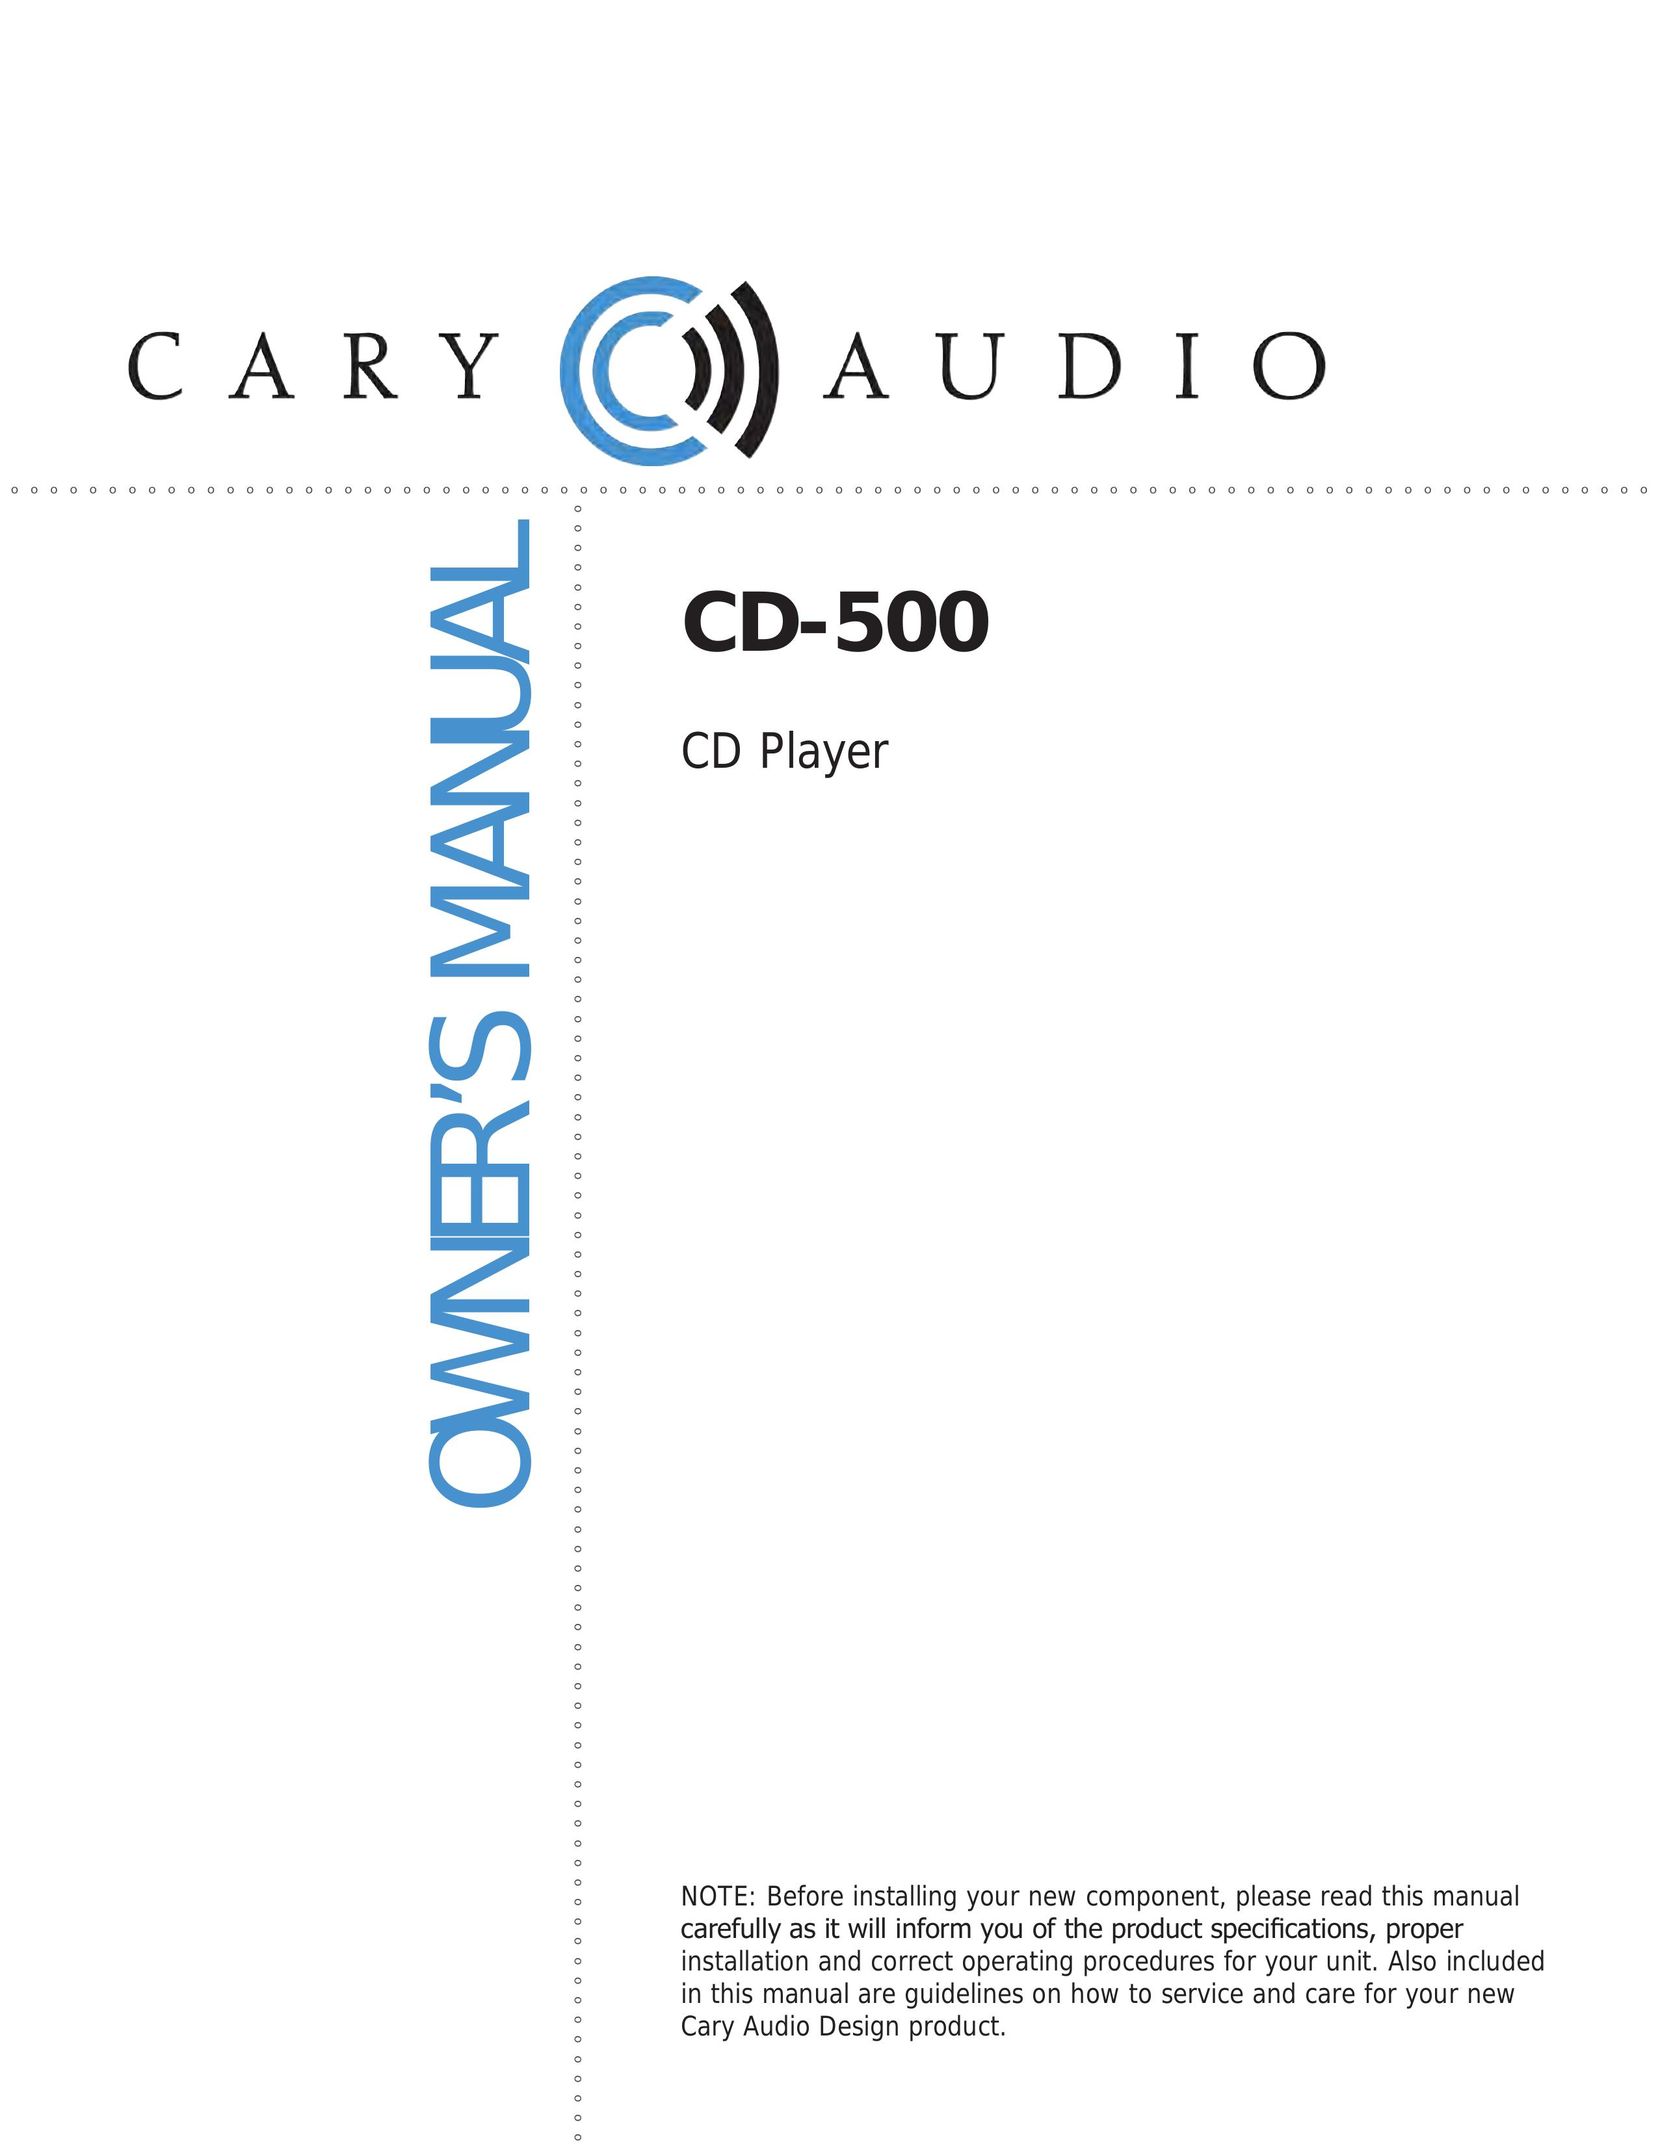 Cary Audio Design CD-500 CD Player User Manual